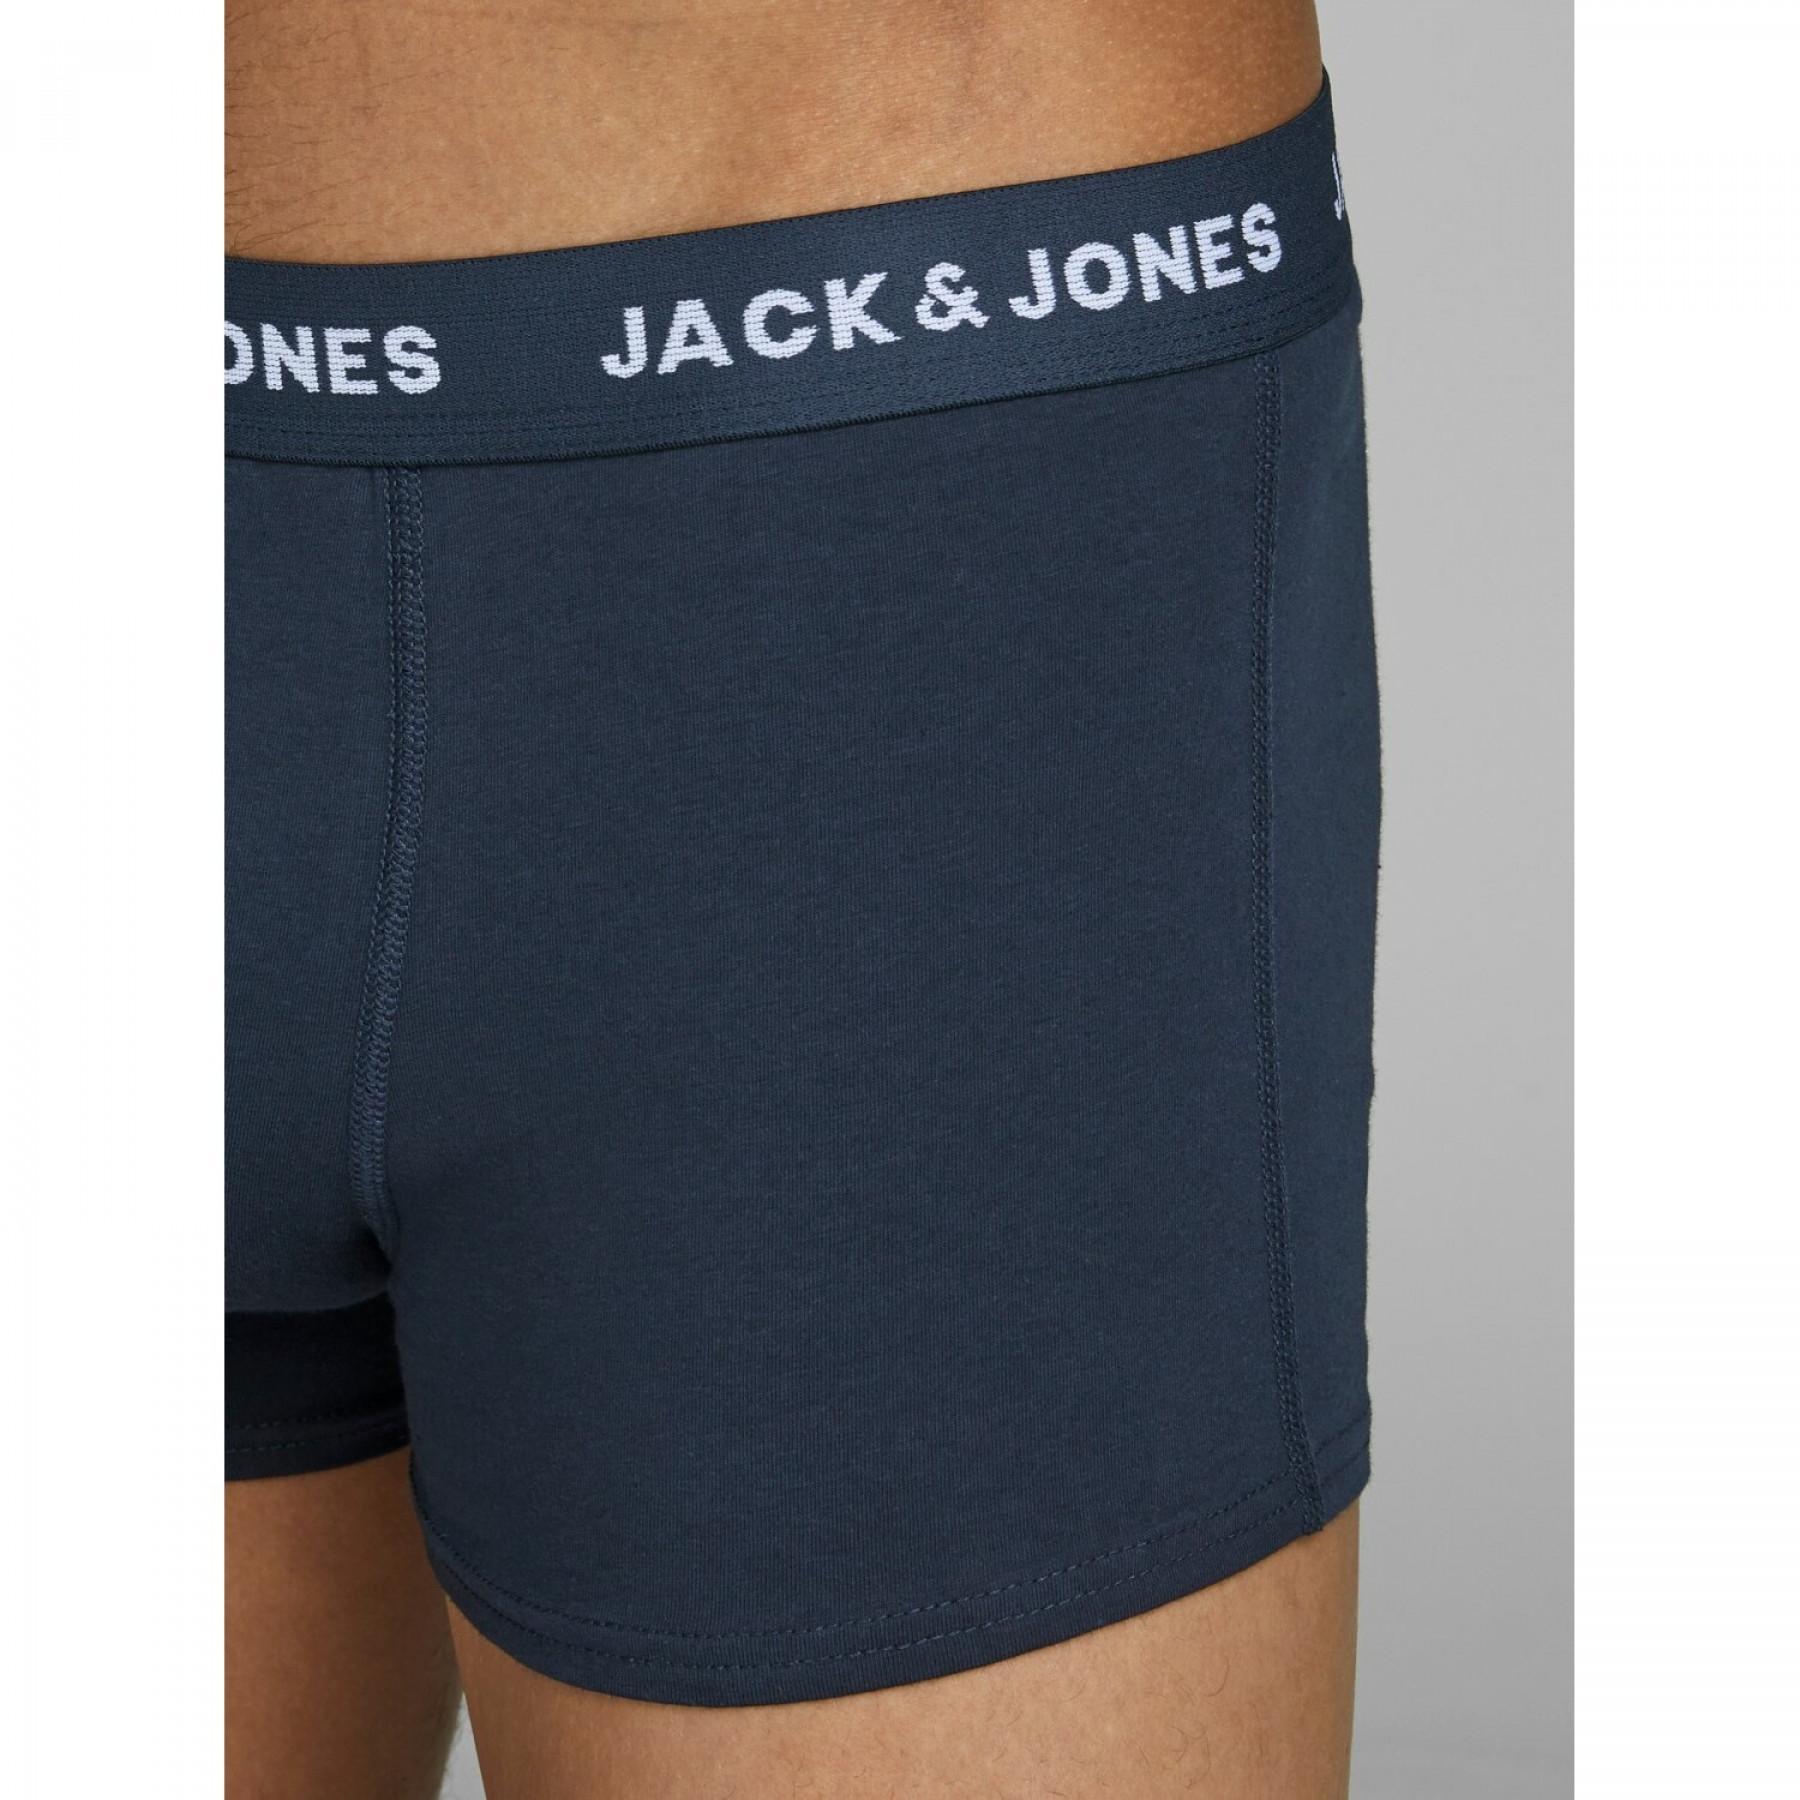 Conjunto de 3 calções de boxer Jack & Jones jacanthony